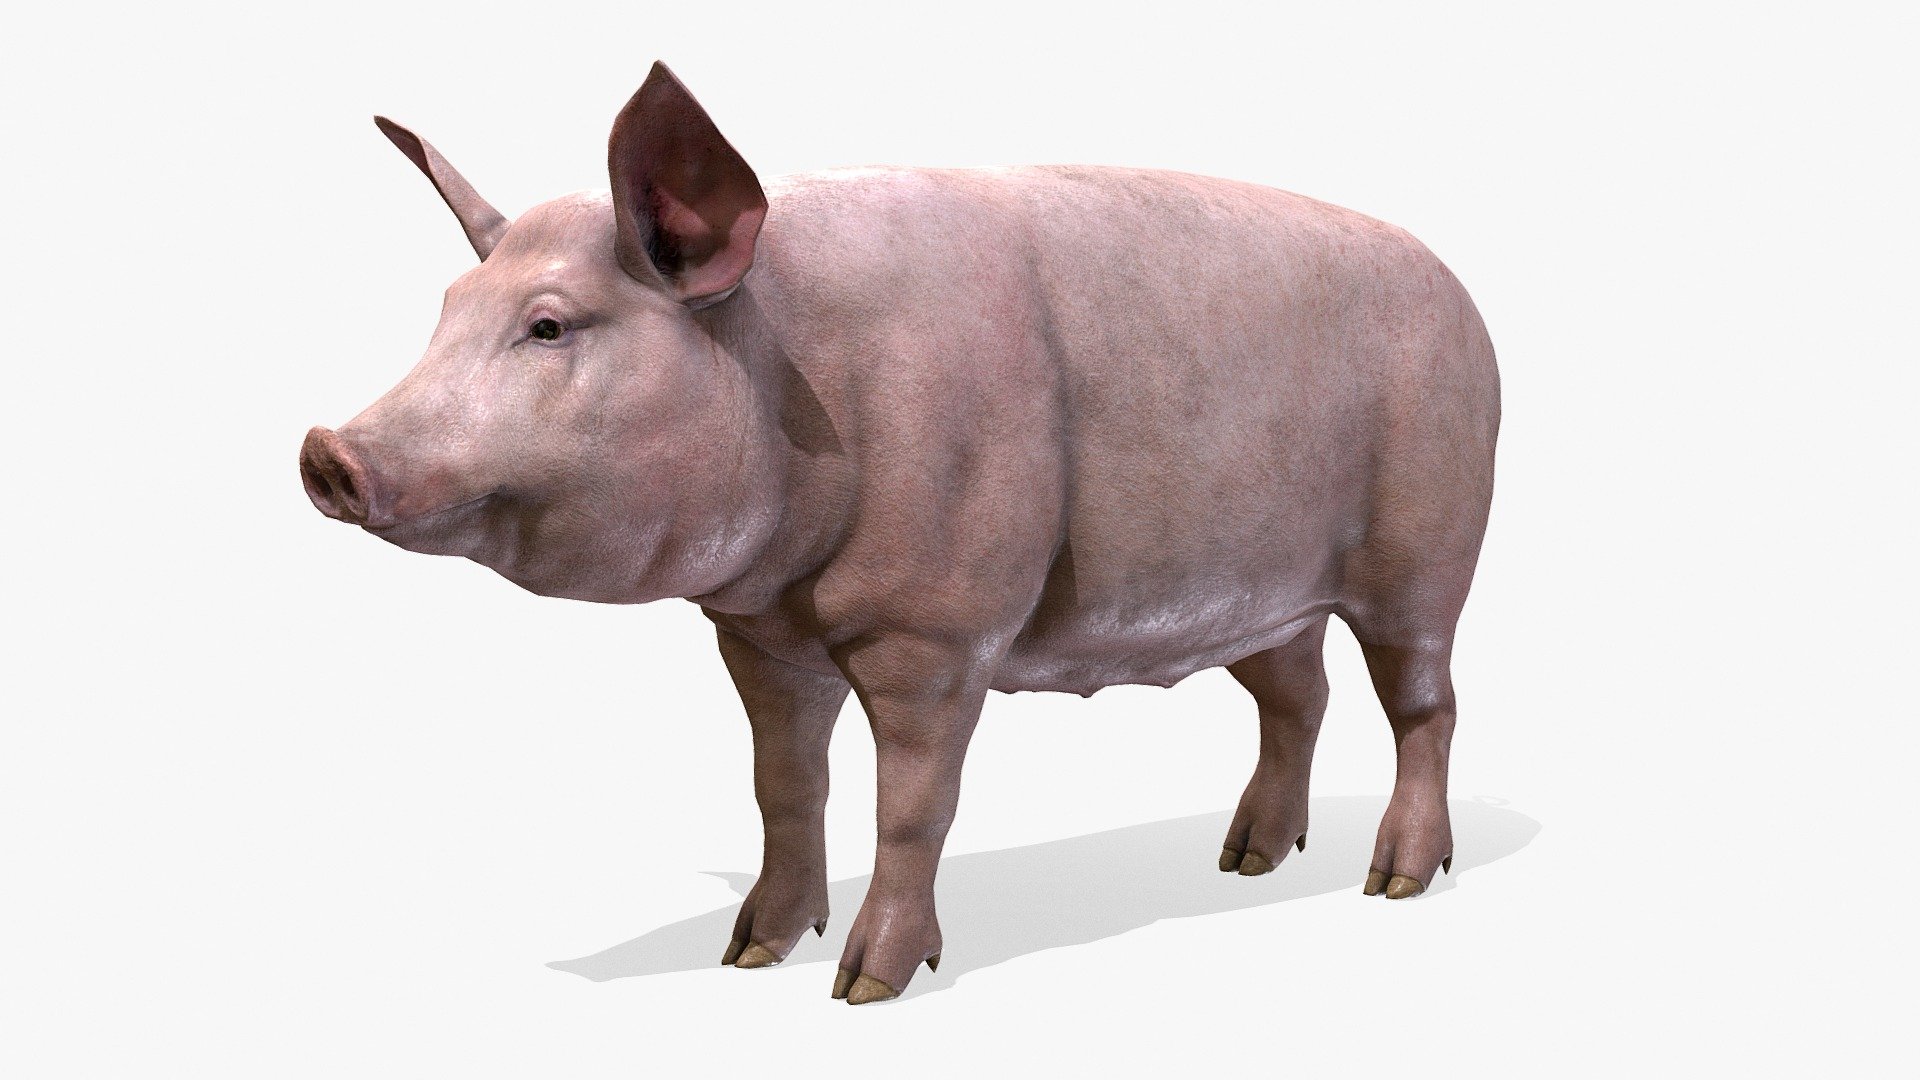 Pig animations